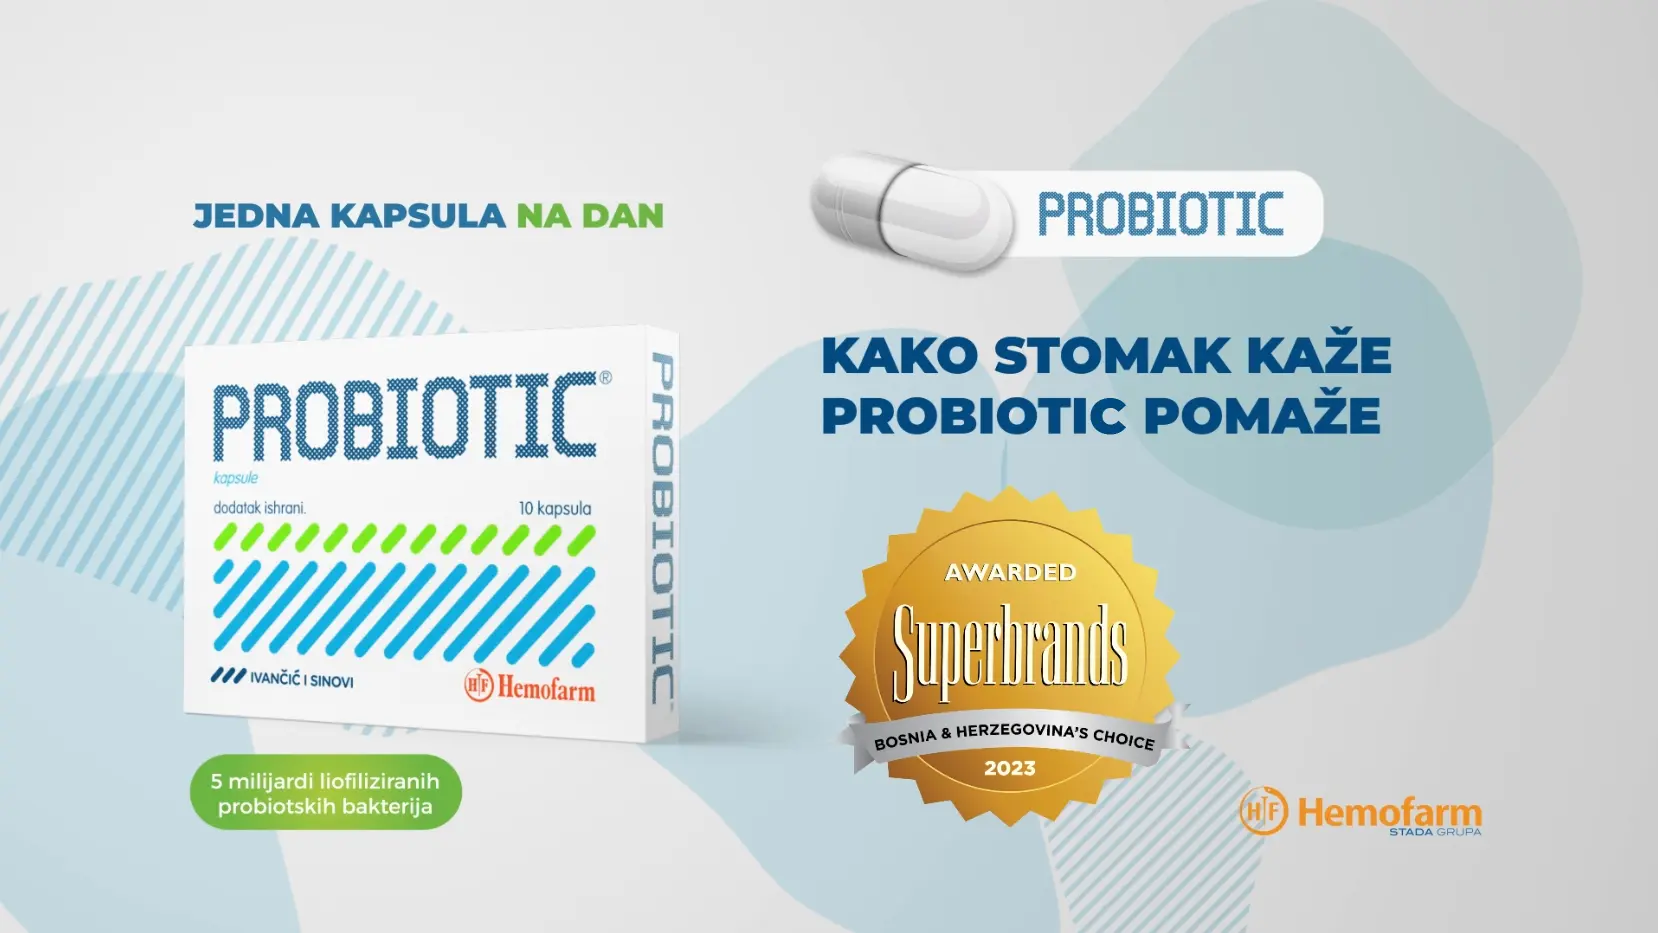 Probiotic-64afb7bacbb7f.webp